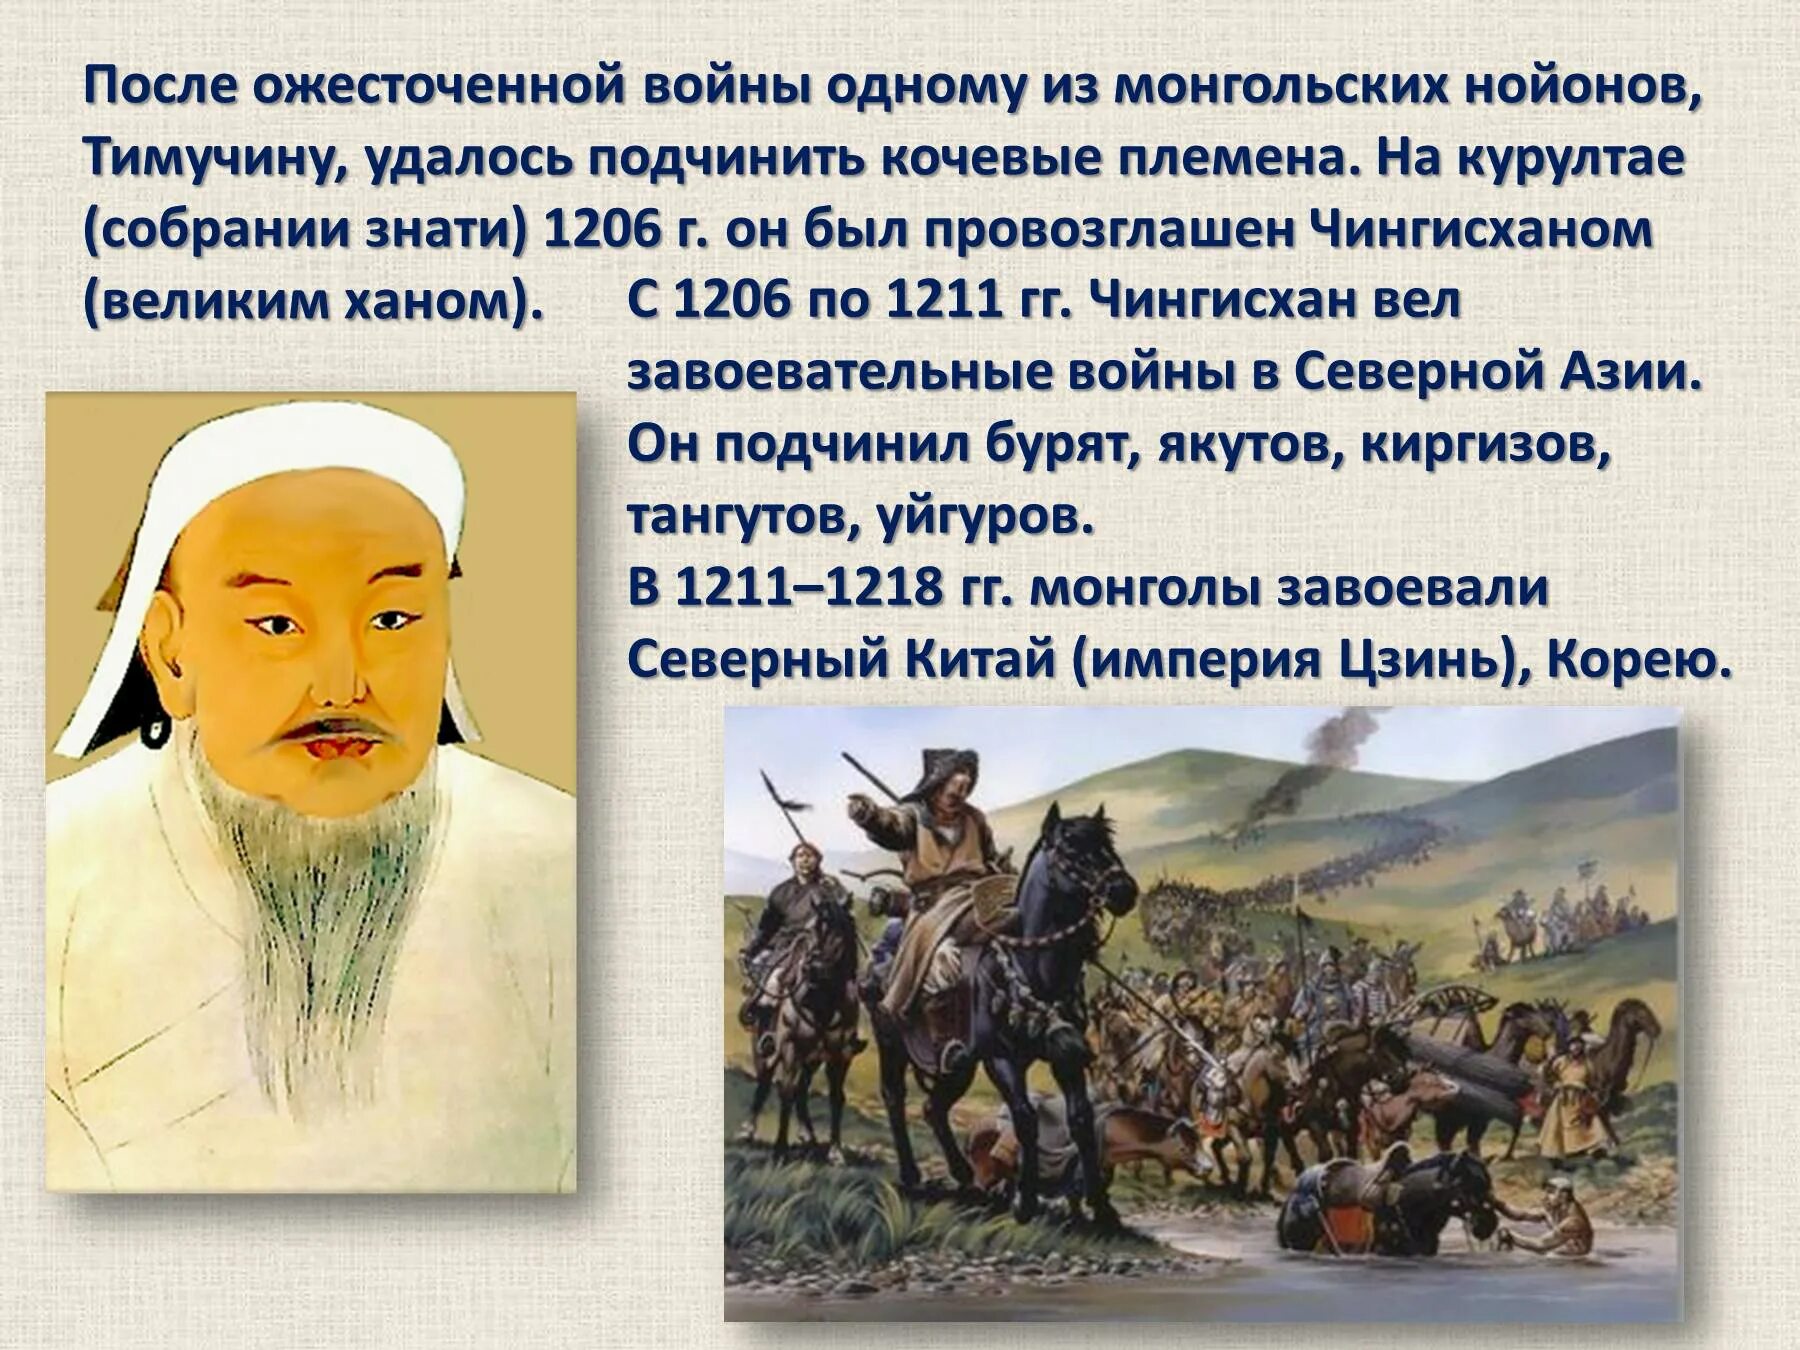 Великие ханы после чингисхана. Монголия Чингис Хан. Образование империи Чингисхана 6 класс. Темучин-нойон.